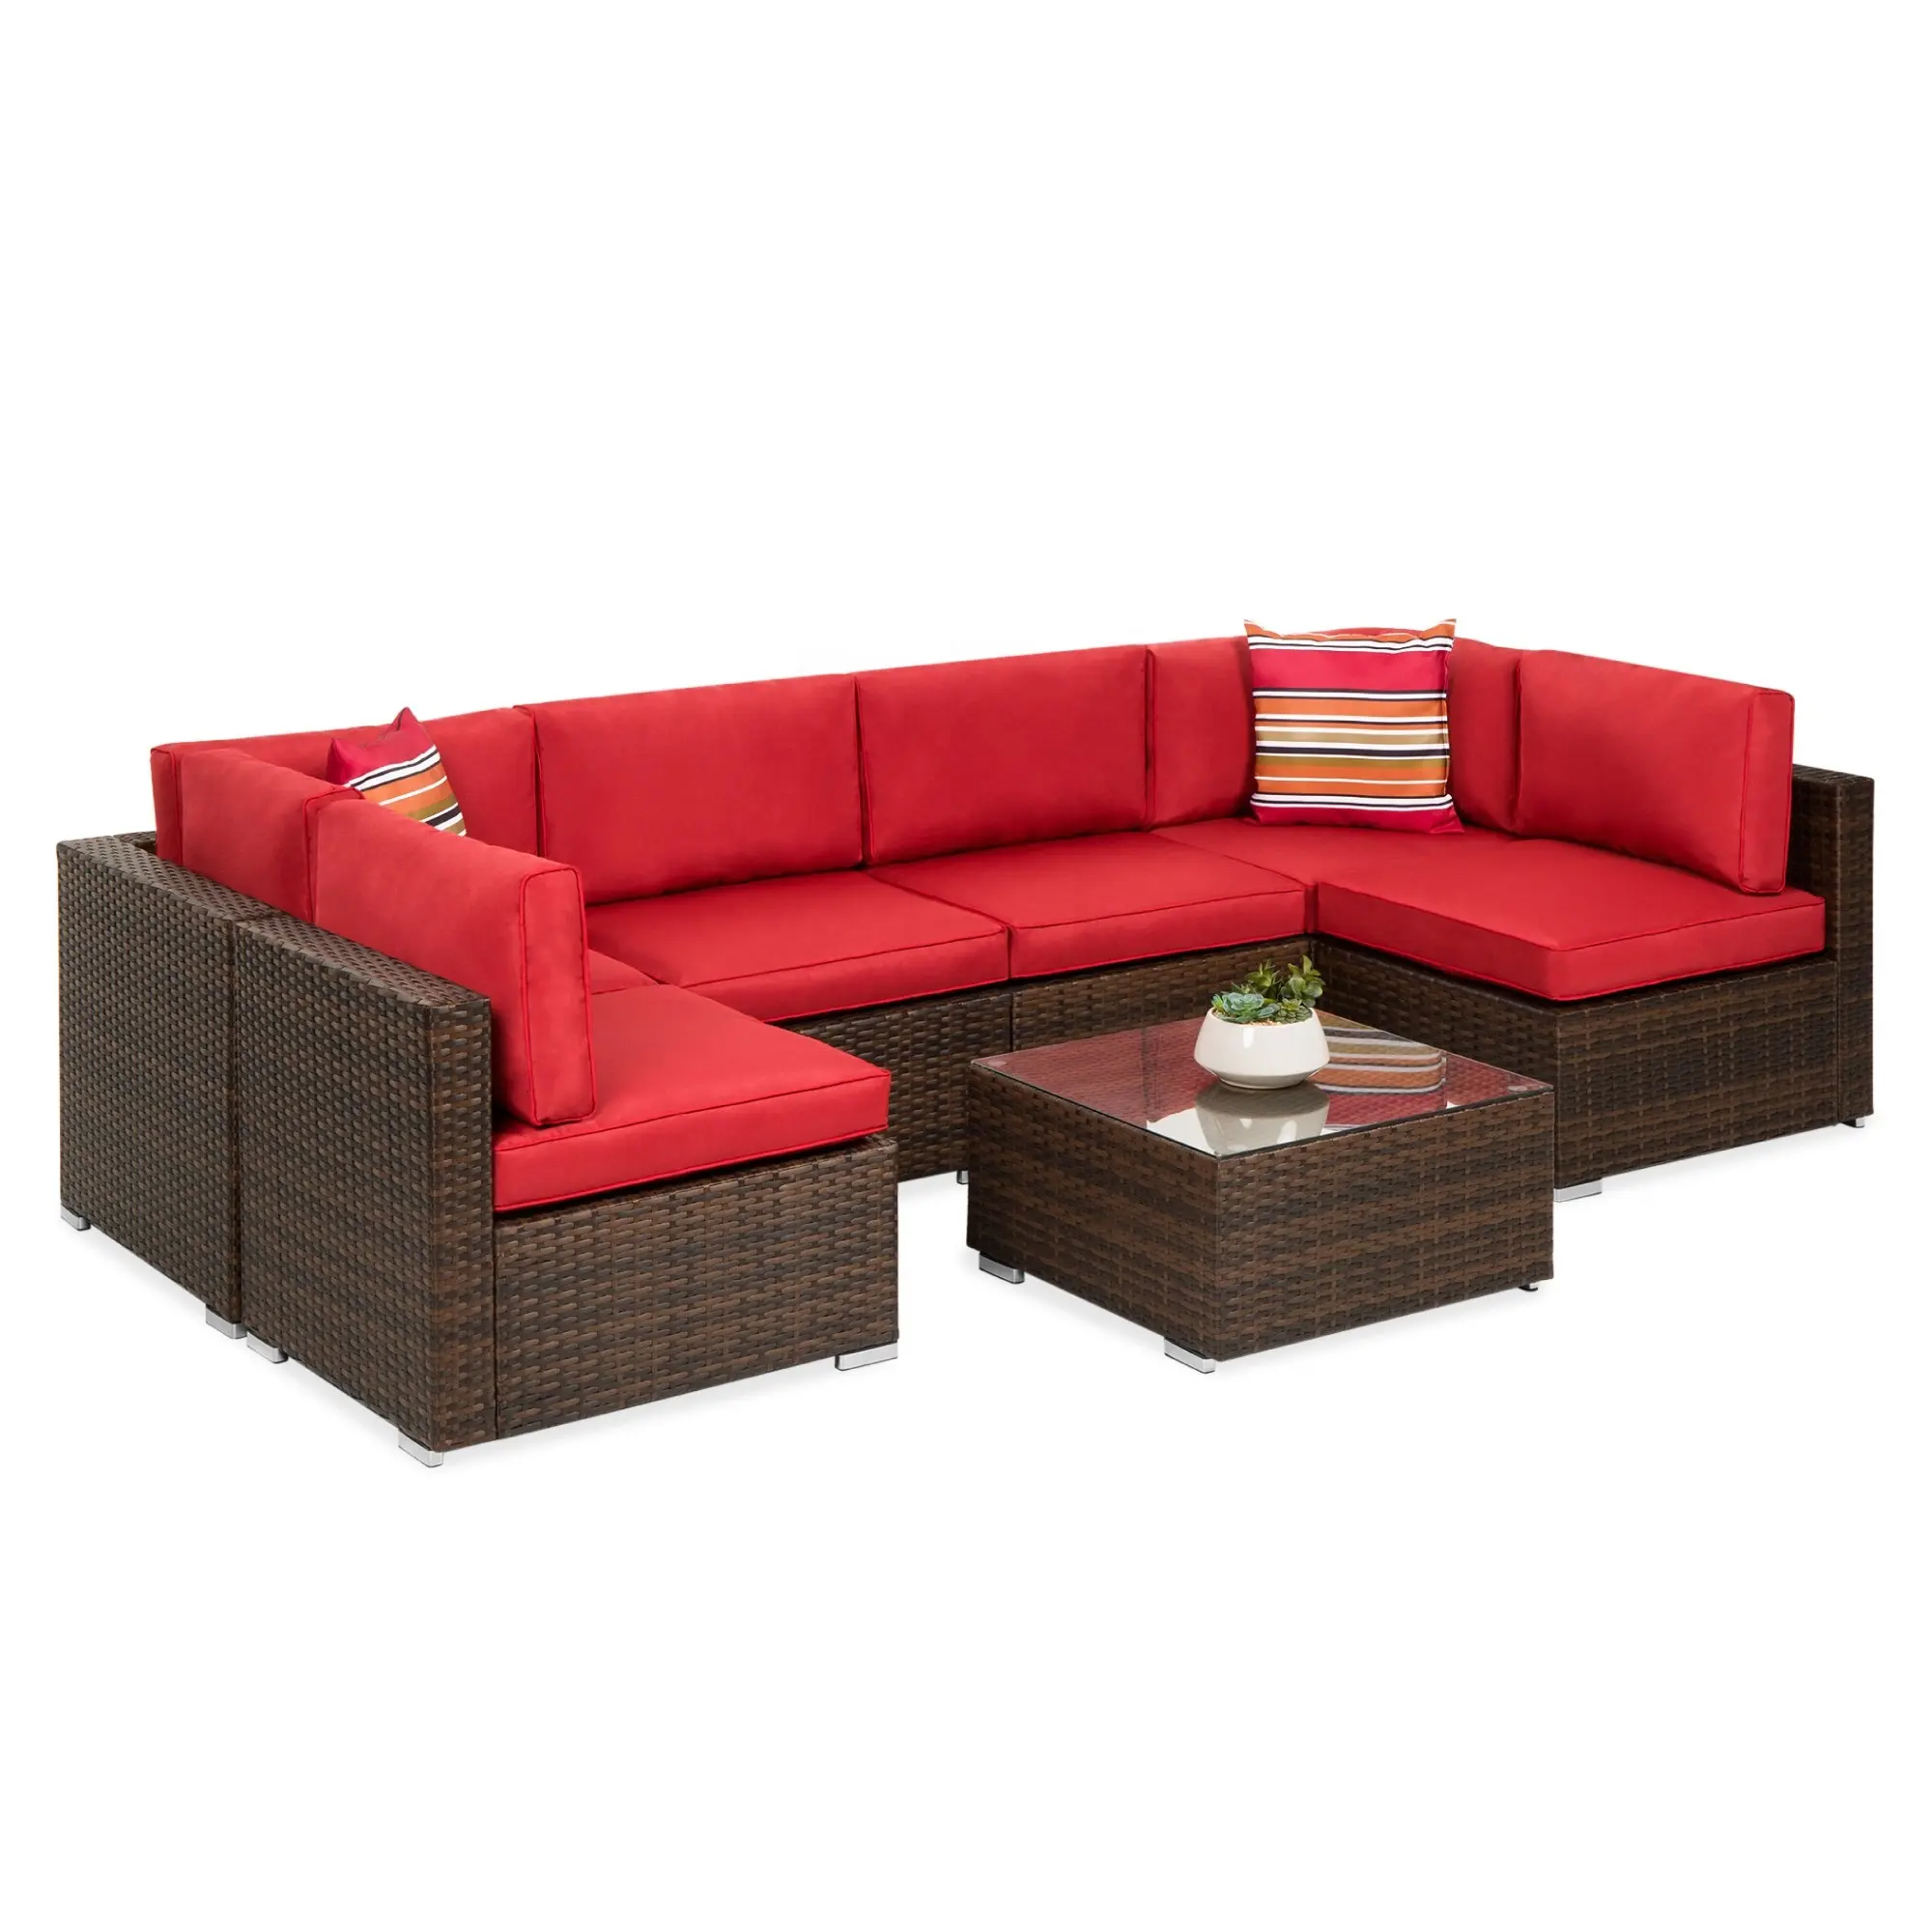 best seller 7 pieces outdoor rattan sofa modular conversation patio rattan set luxury garden furniture wicker L sectional sofa